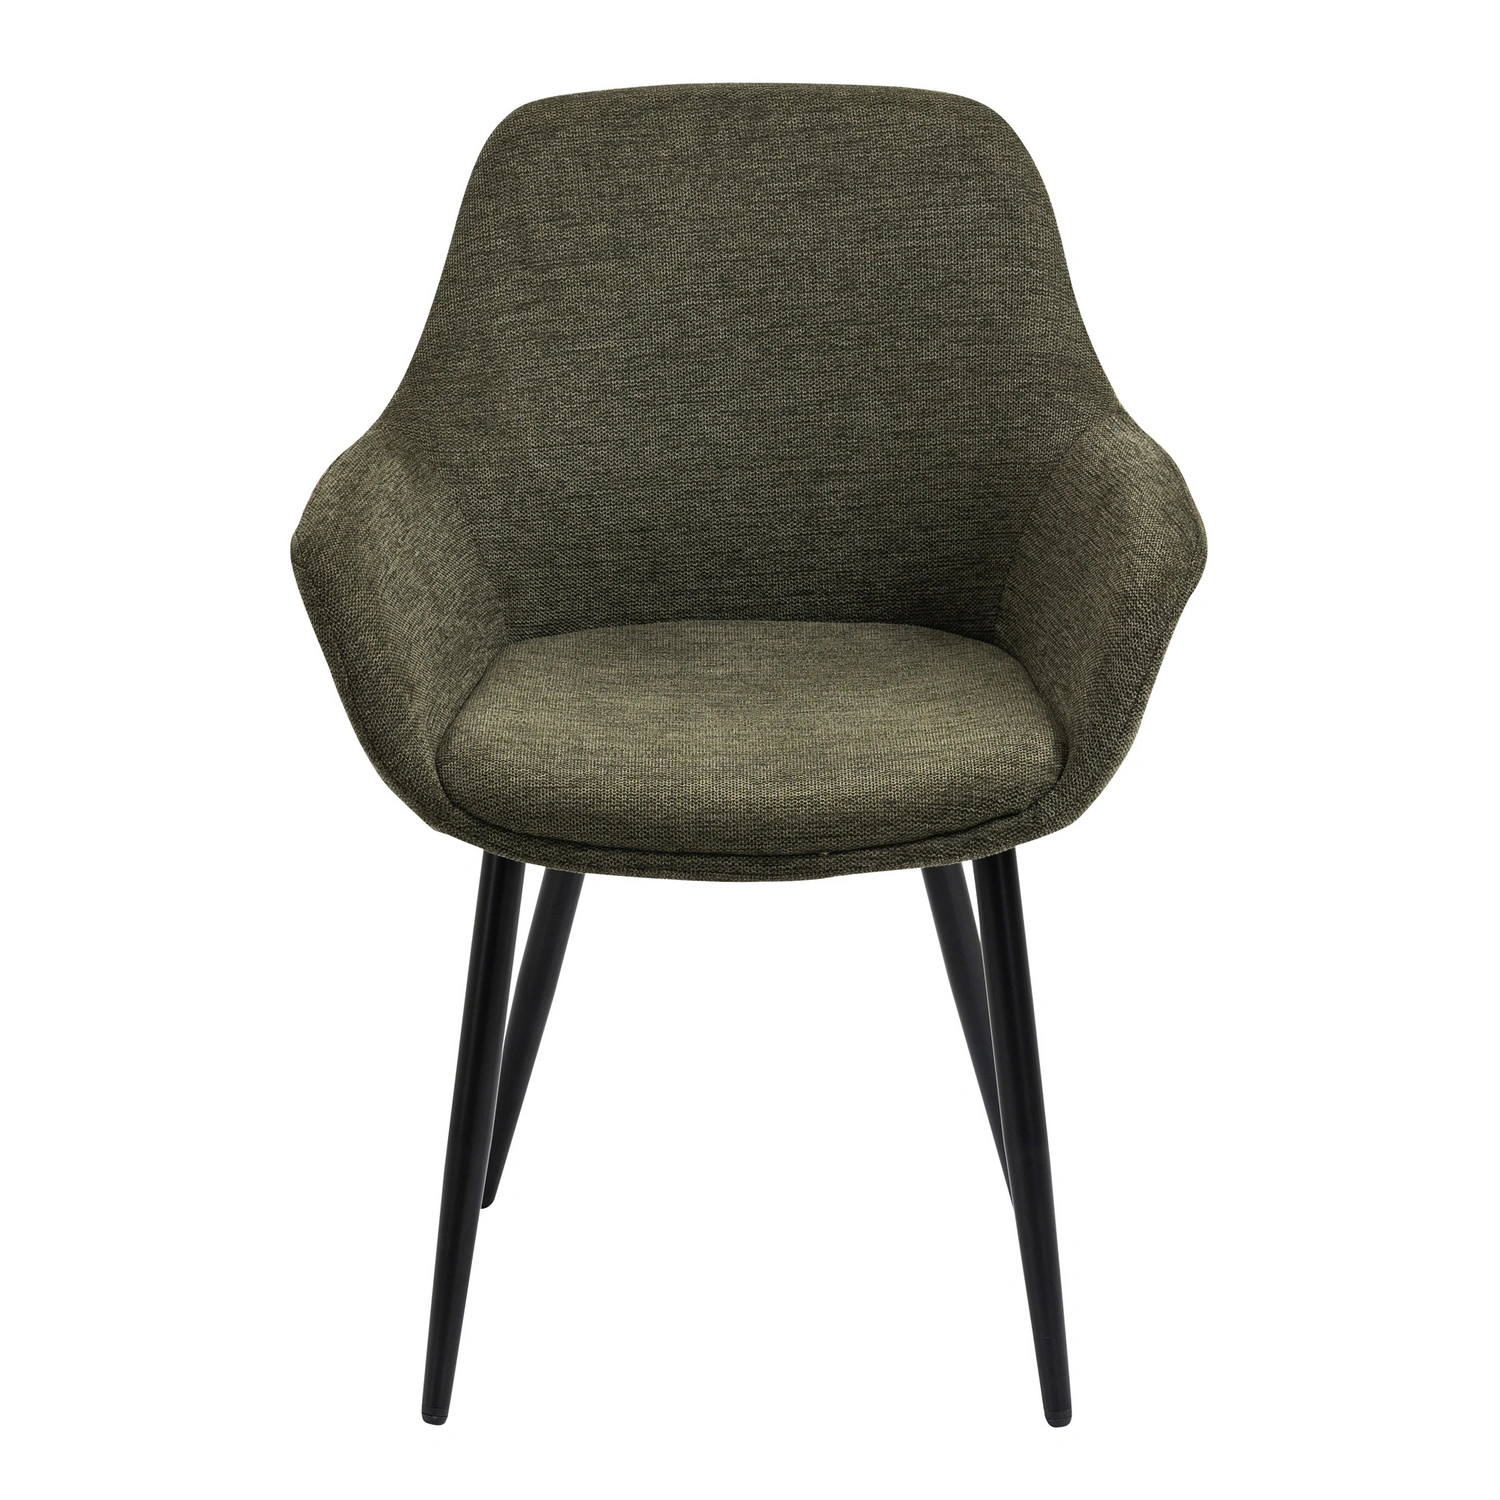 SalesFever Stuhl, Höhe: 86 cm, grün/schwarz, 2 stk | 4-Fuß-Stühle